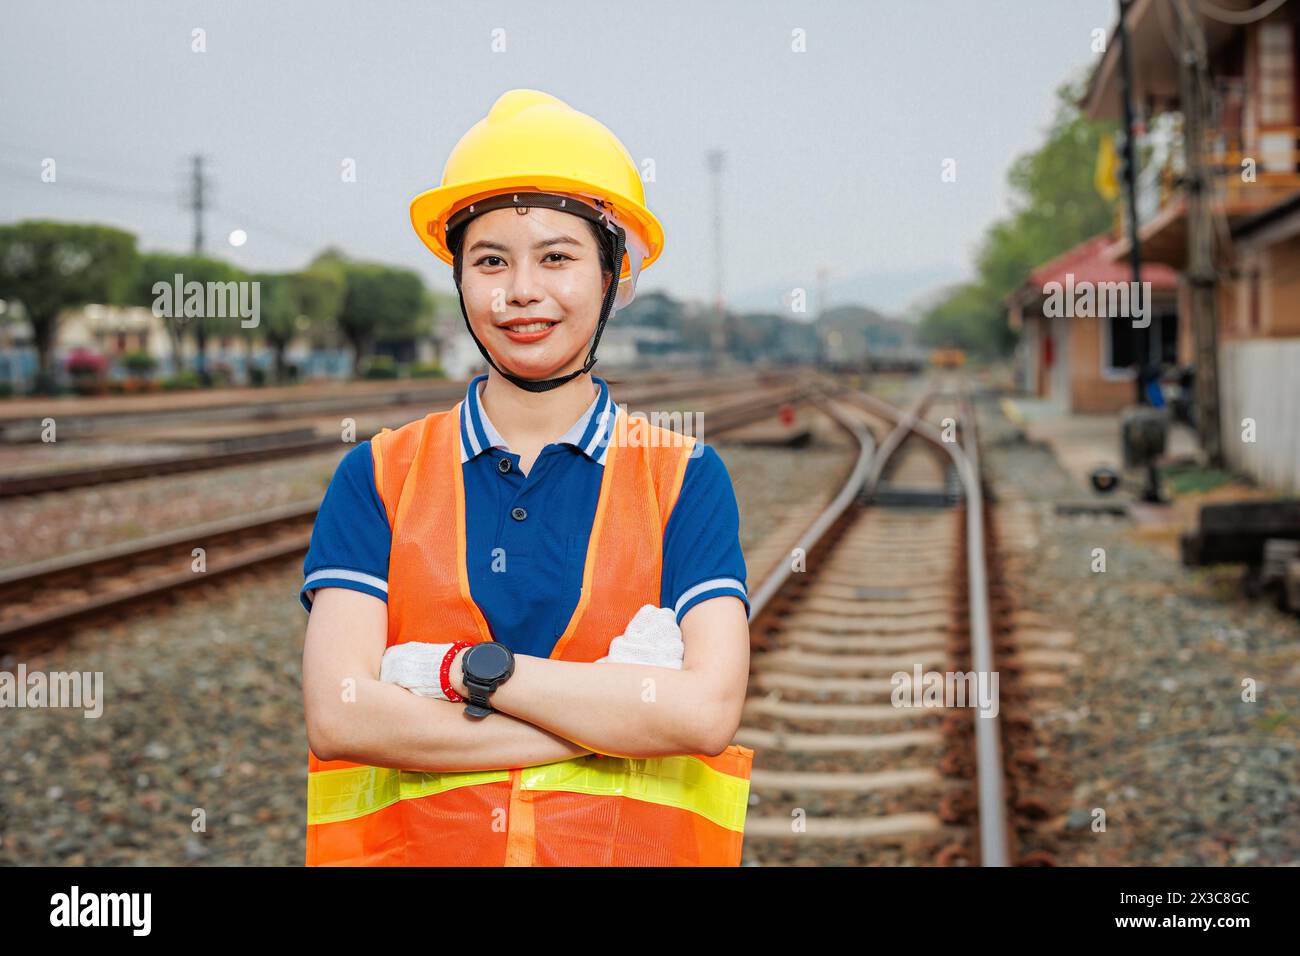 portrait train locomotive engineer women worker. Happy Asian young teen smiling work at train station train track locomotive service maintenance. Stock Photo